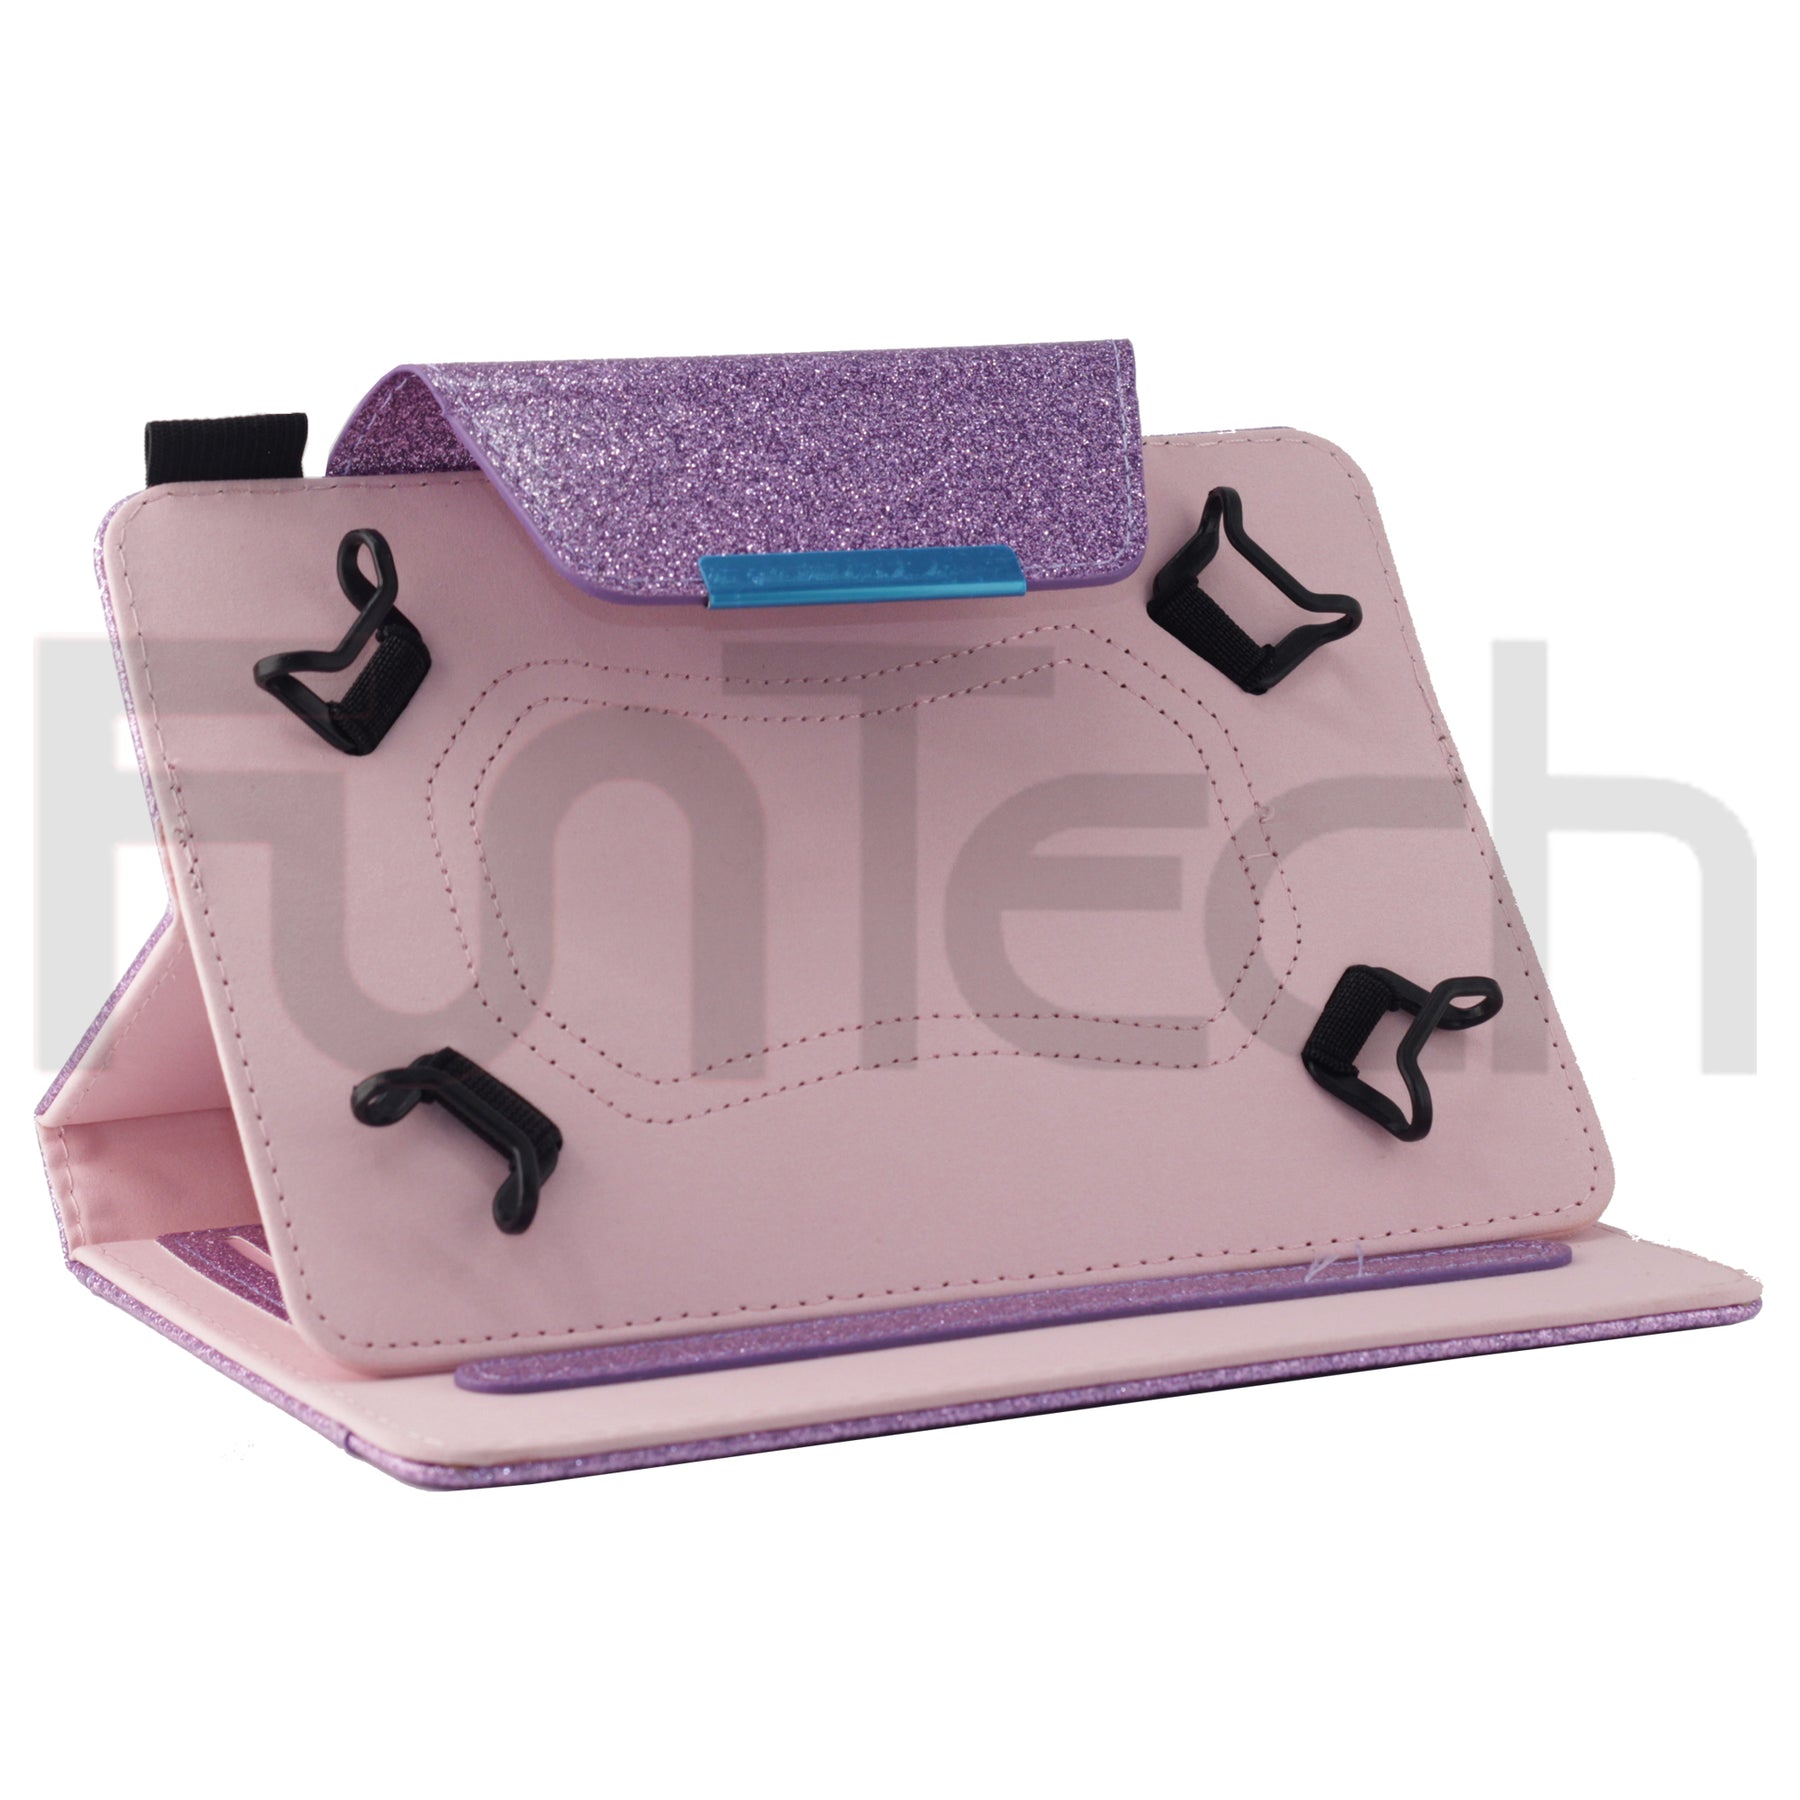 Universal Tablet Case, 7 inch Case, Color Purple.